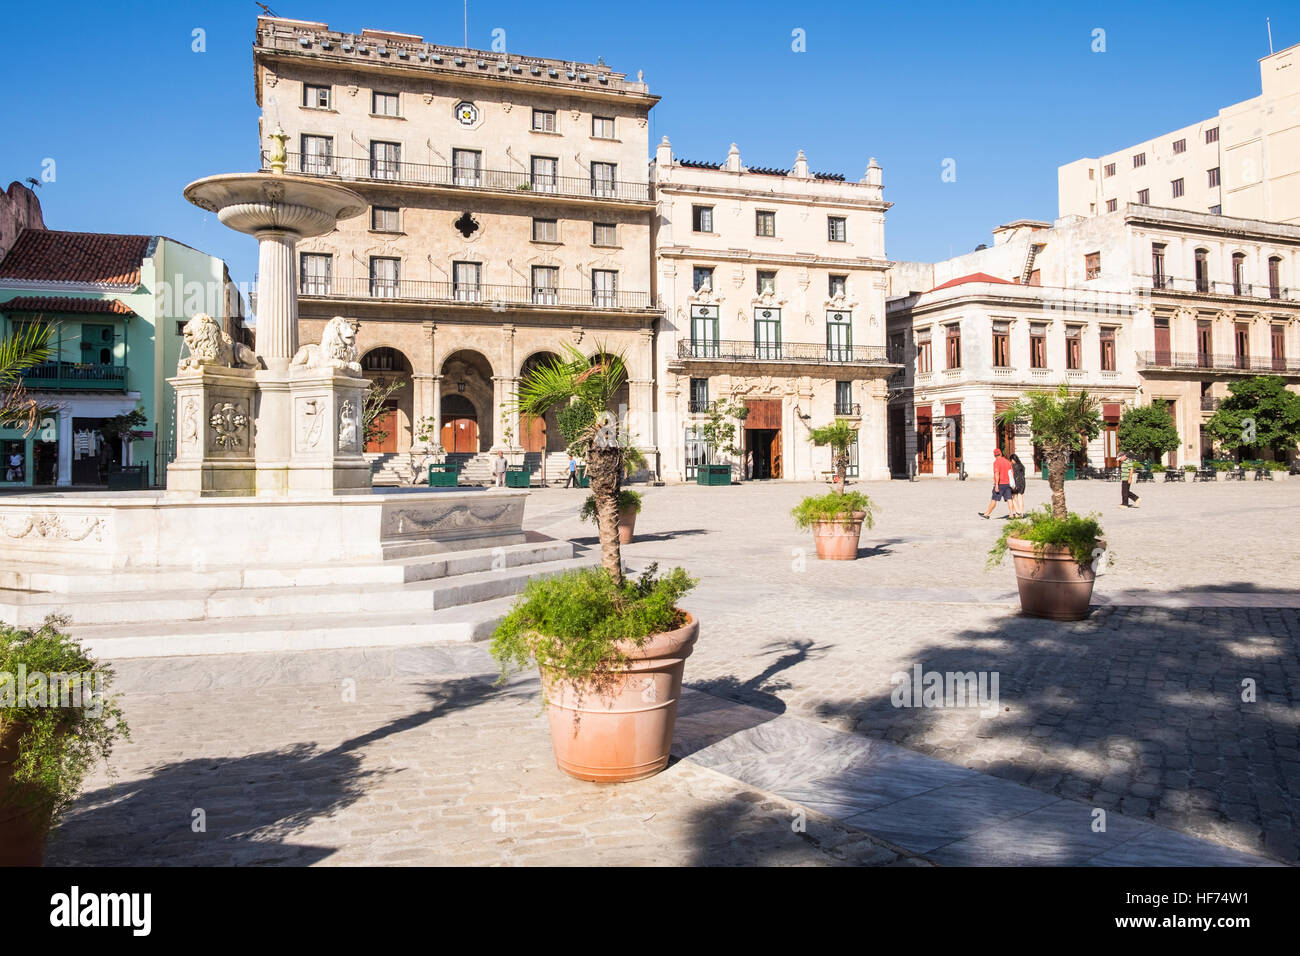 Plaza de San Francisco de Asisi, La Havana, Cuba. Stock Photo